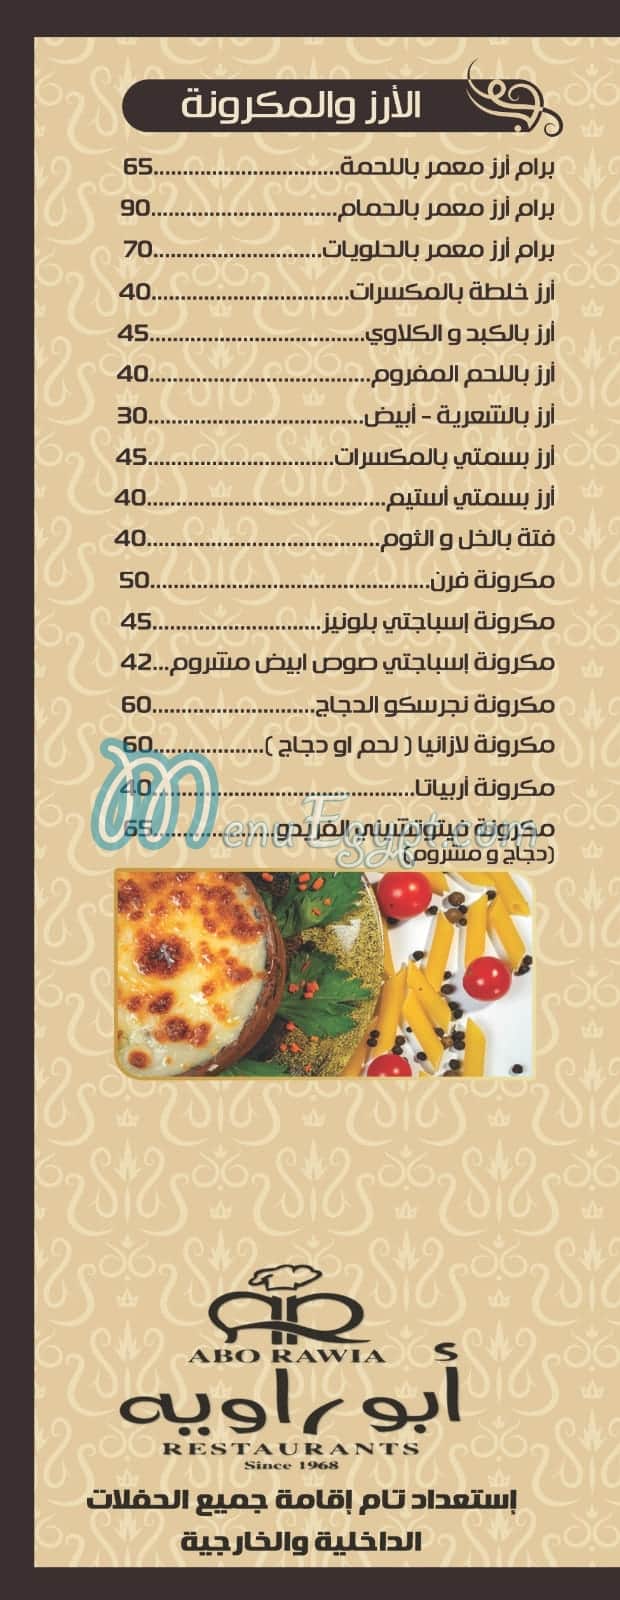 Abo Rawia Restaurant delivery menu